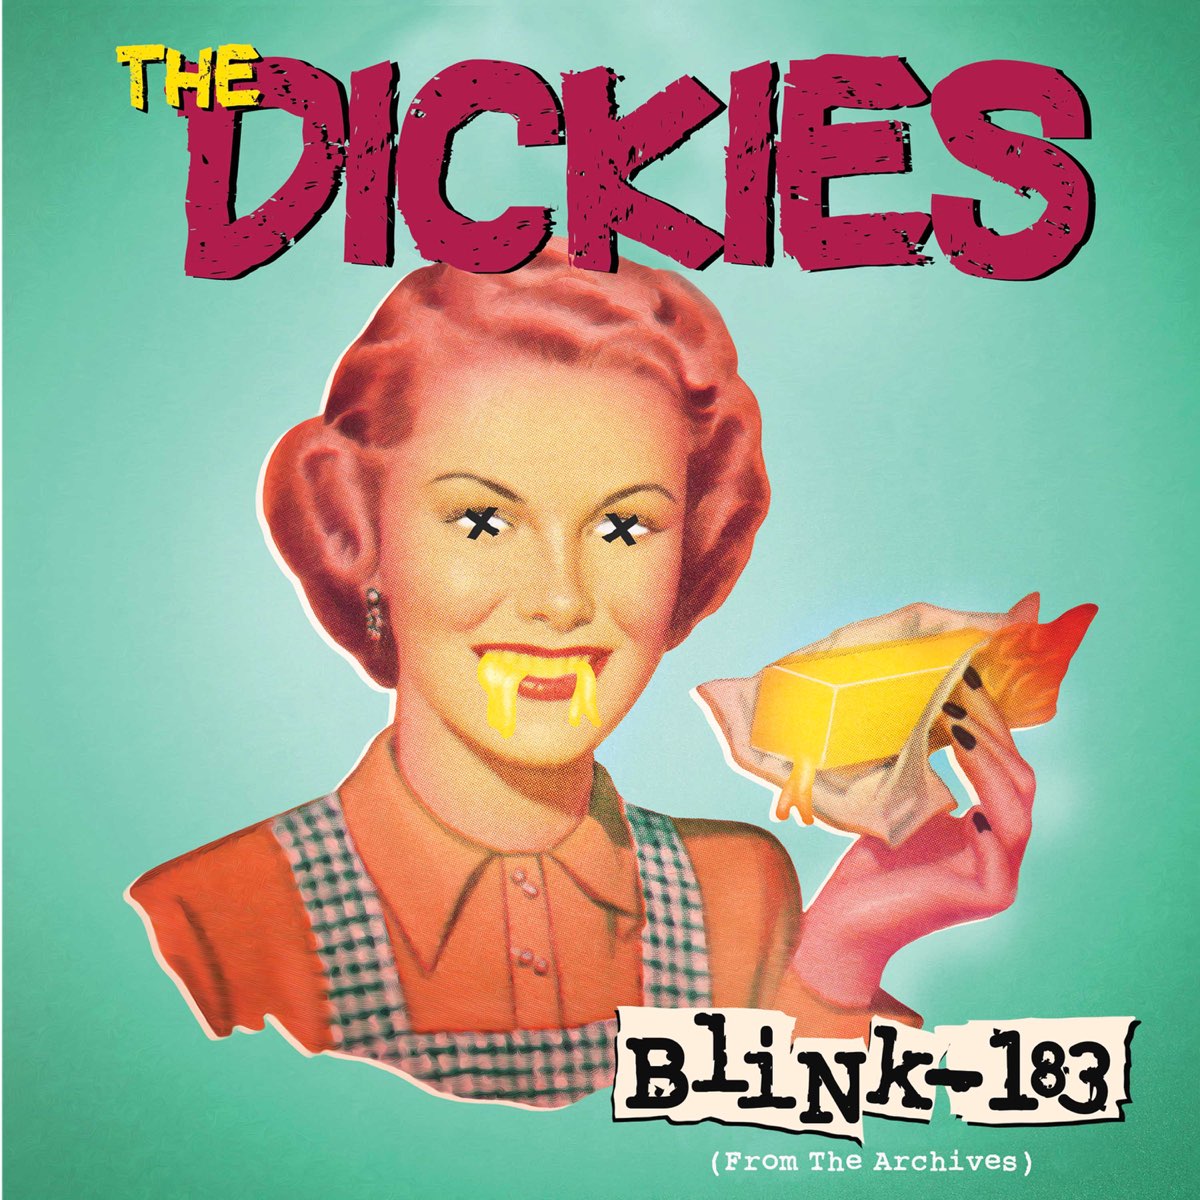 Dick song. Blink 183. Dickies. The Dickies группа. Blink more.